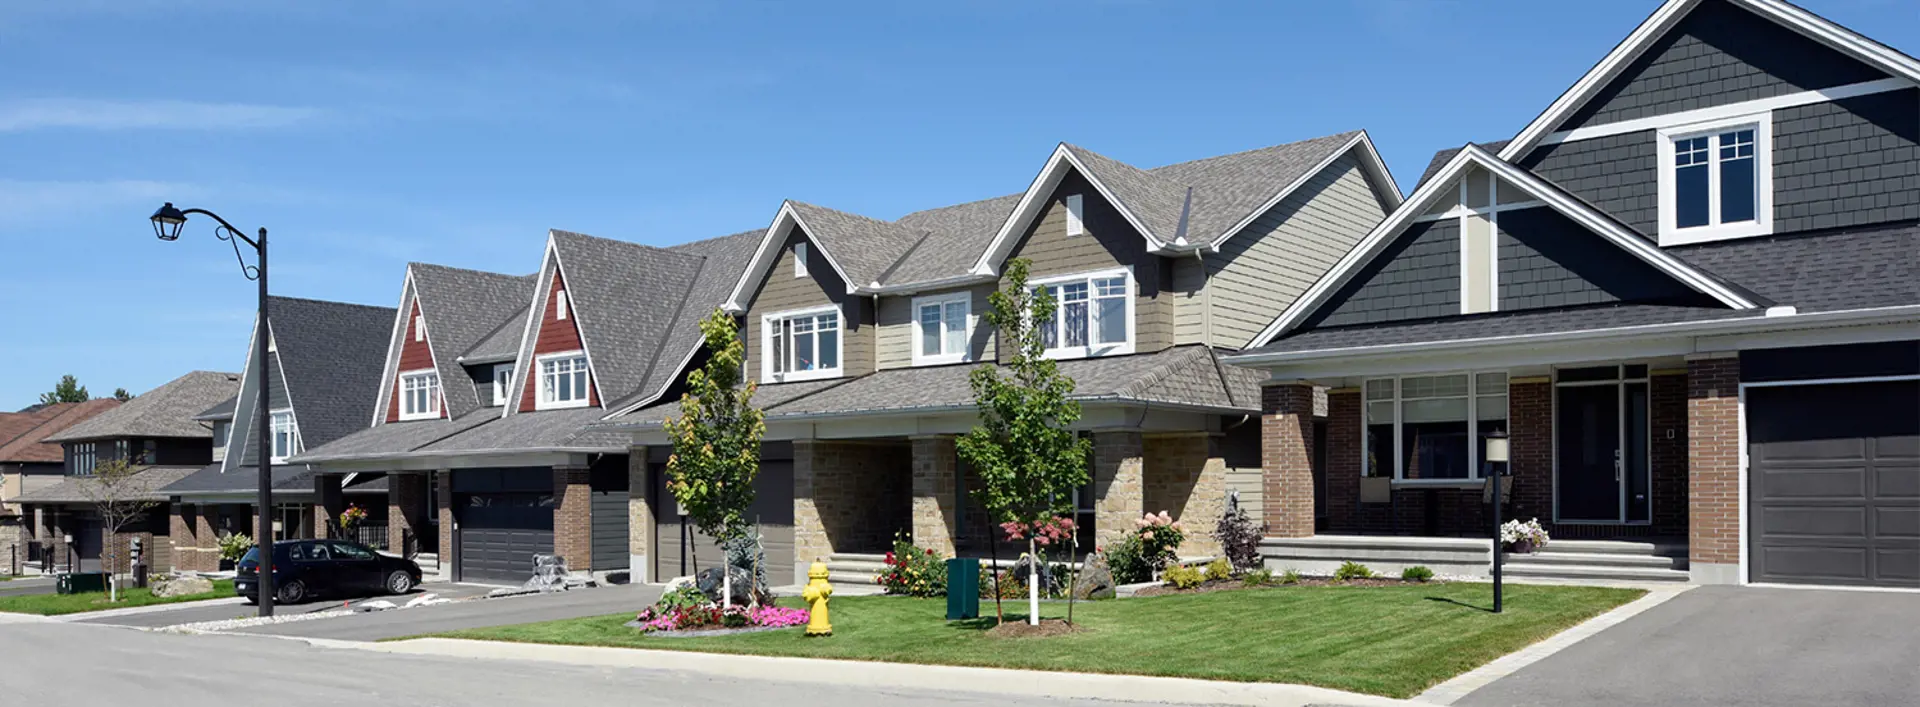 Copperwood Estate Towns located at Kanata, Ontario, Canada image